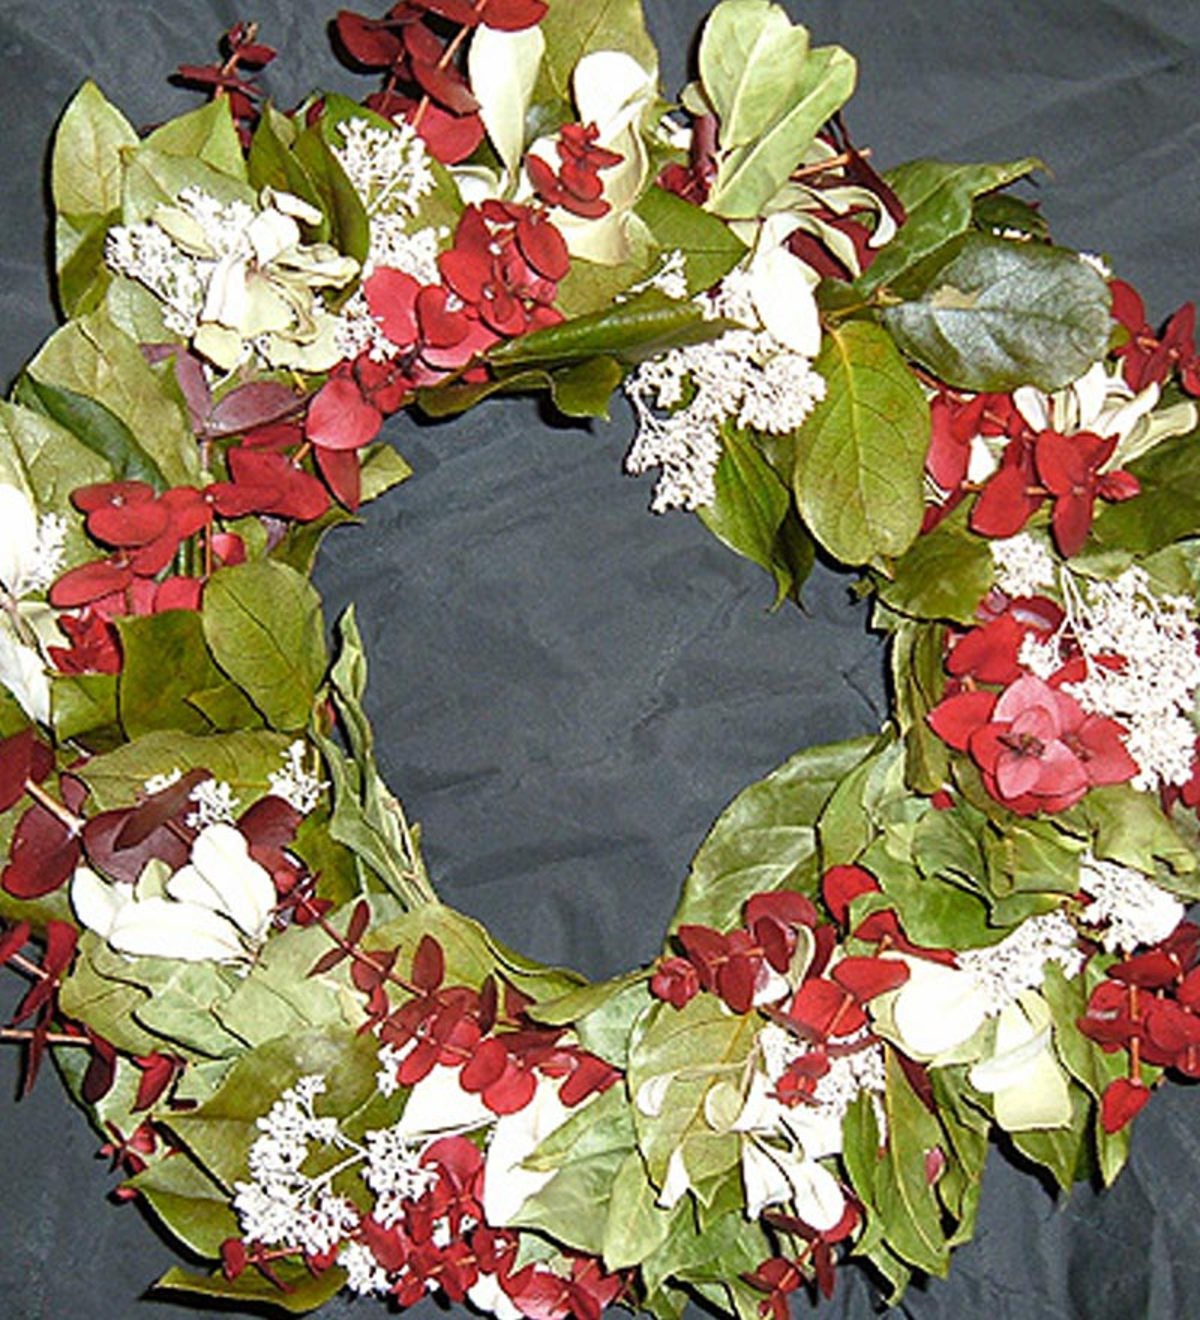 Handmade, All-Natural Nature's Essence Wreath